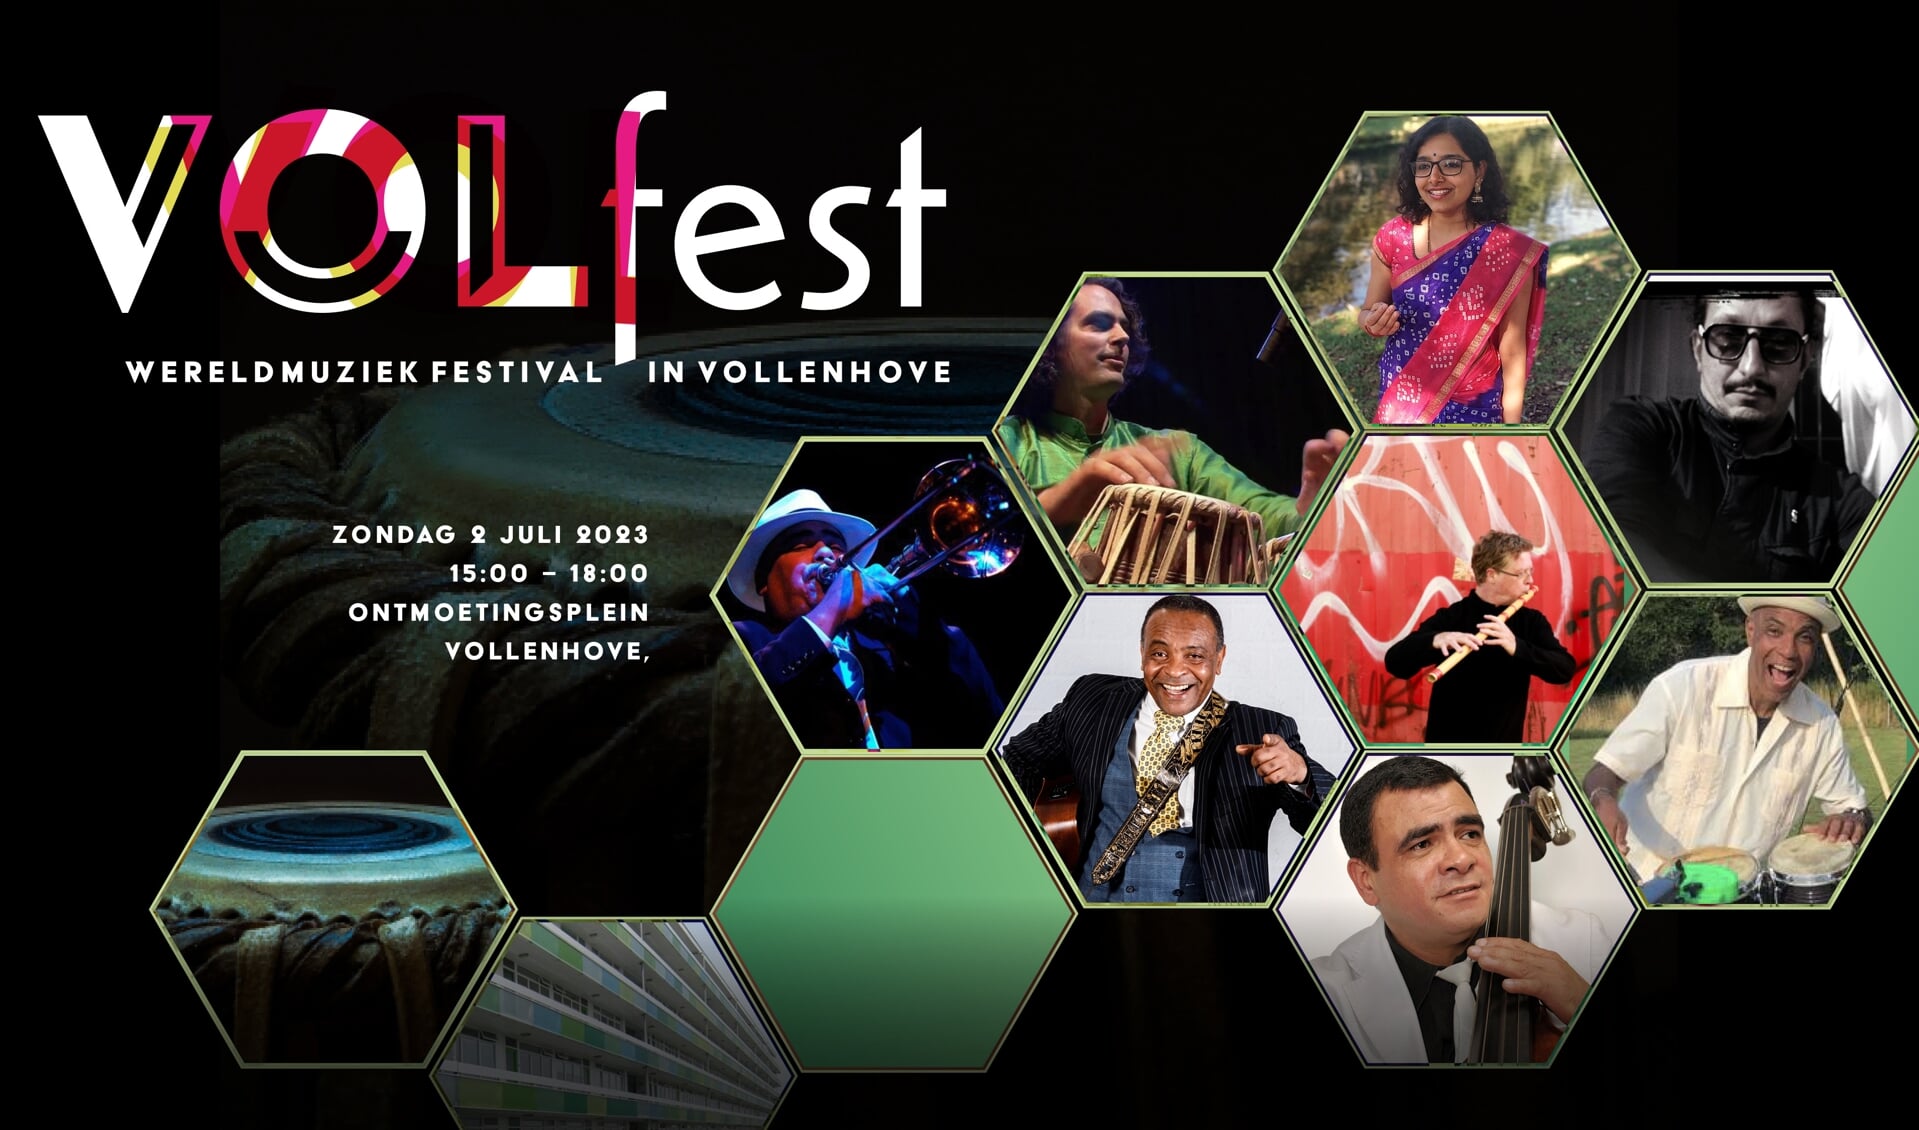 Wereldmuziekfestival VOLfest: muziek uit Cuba, India en Sudan.